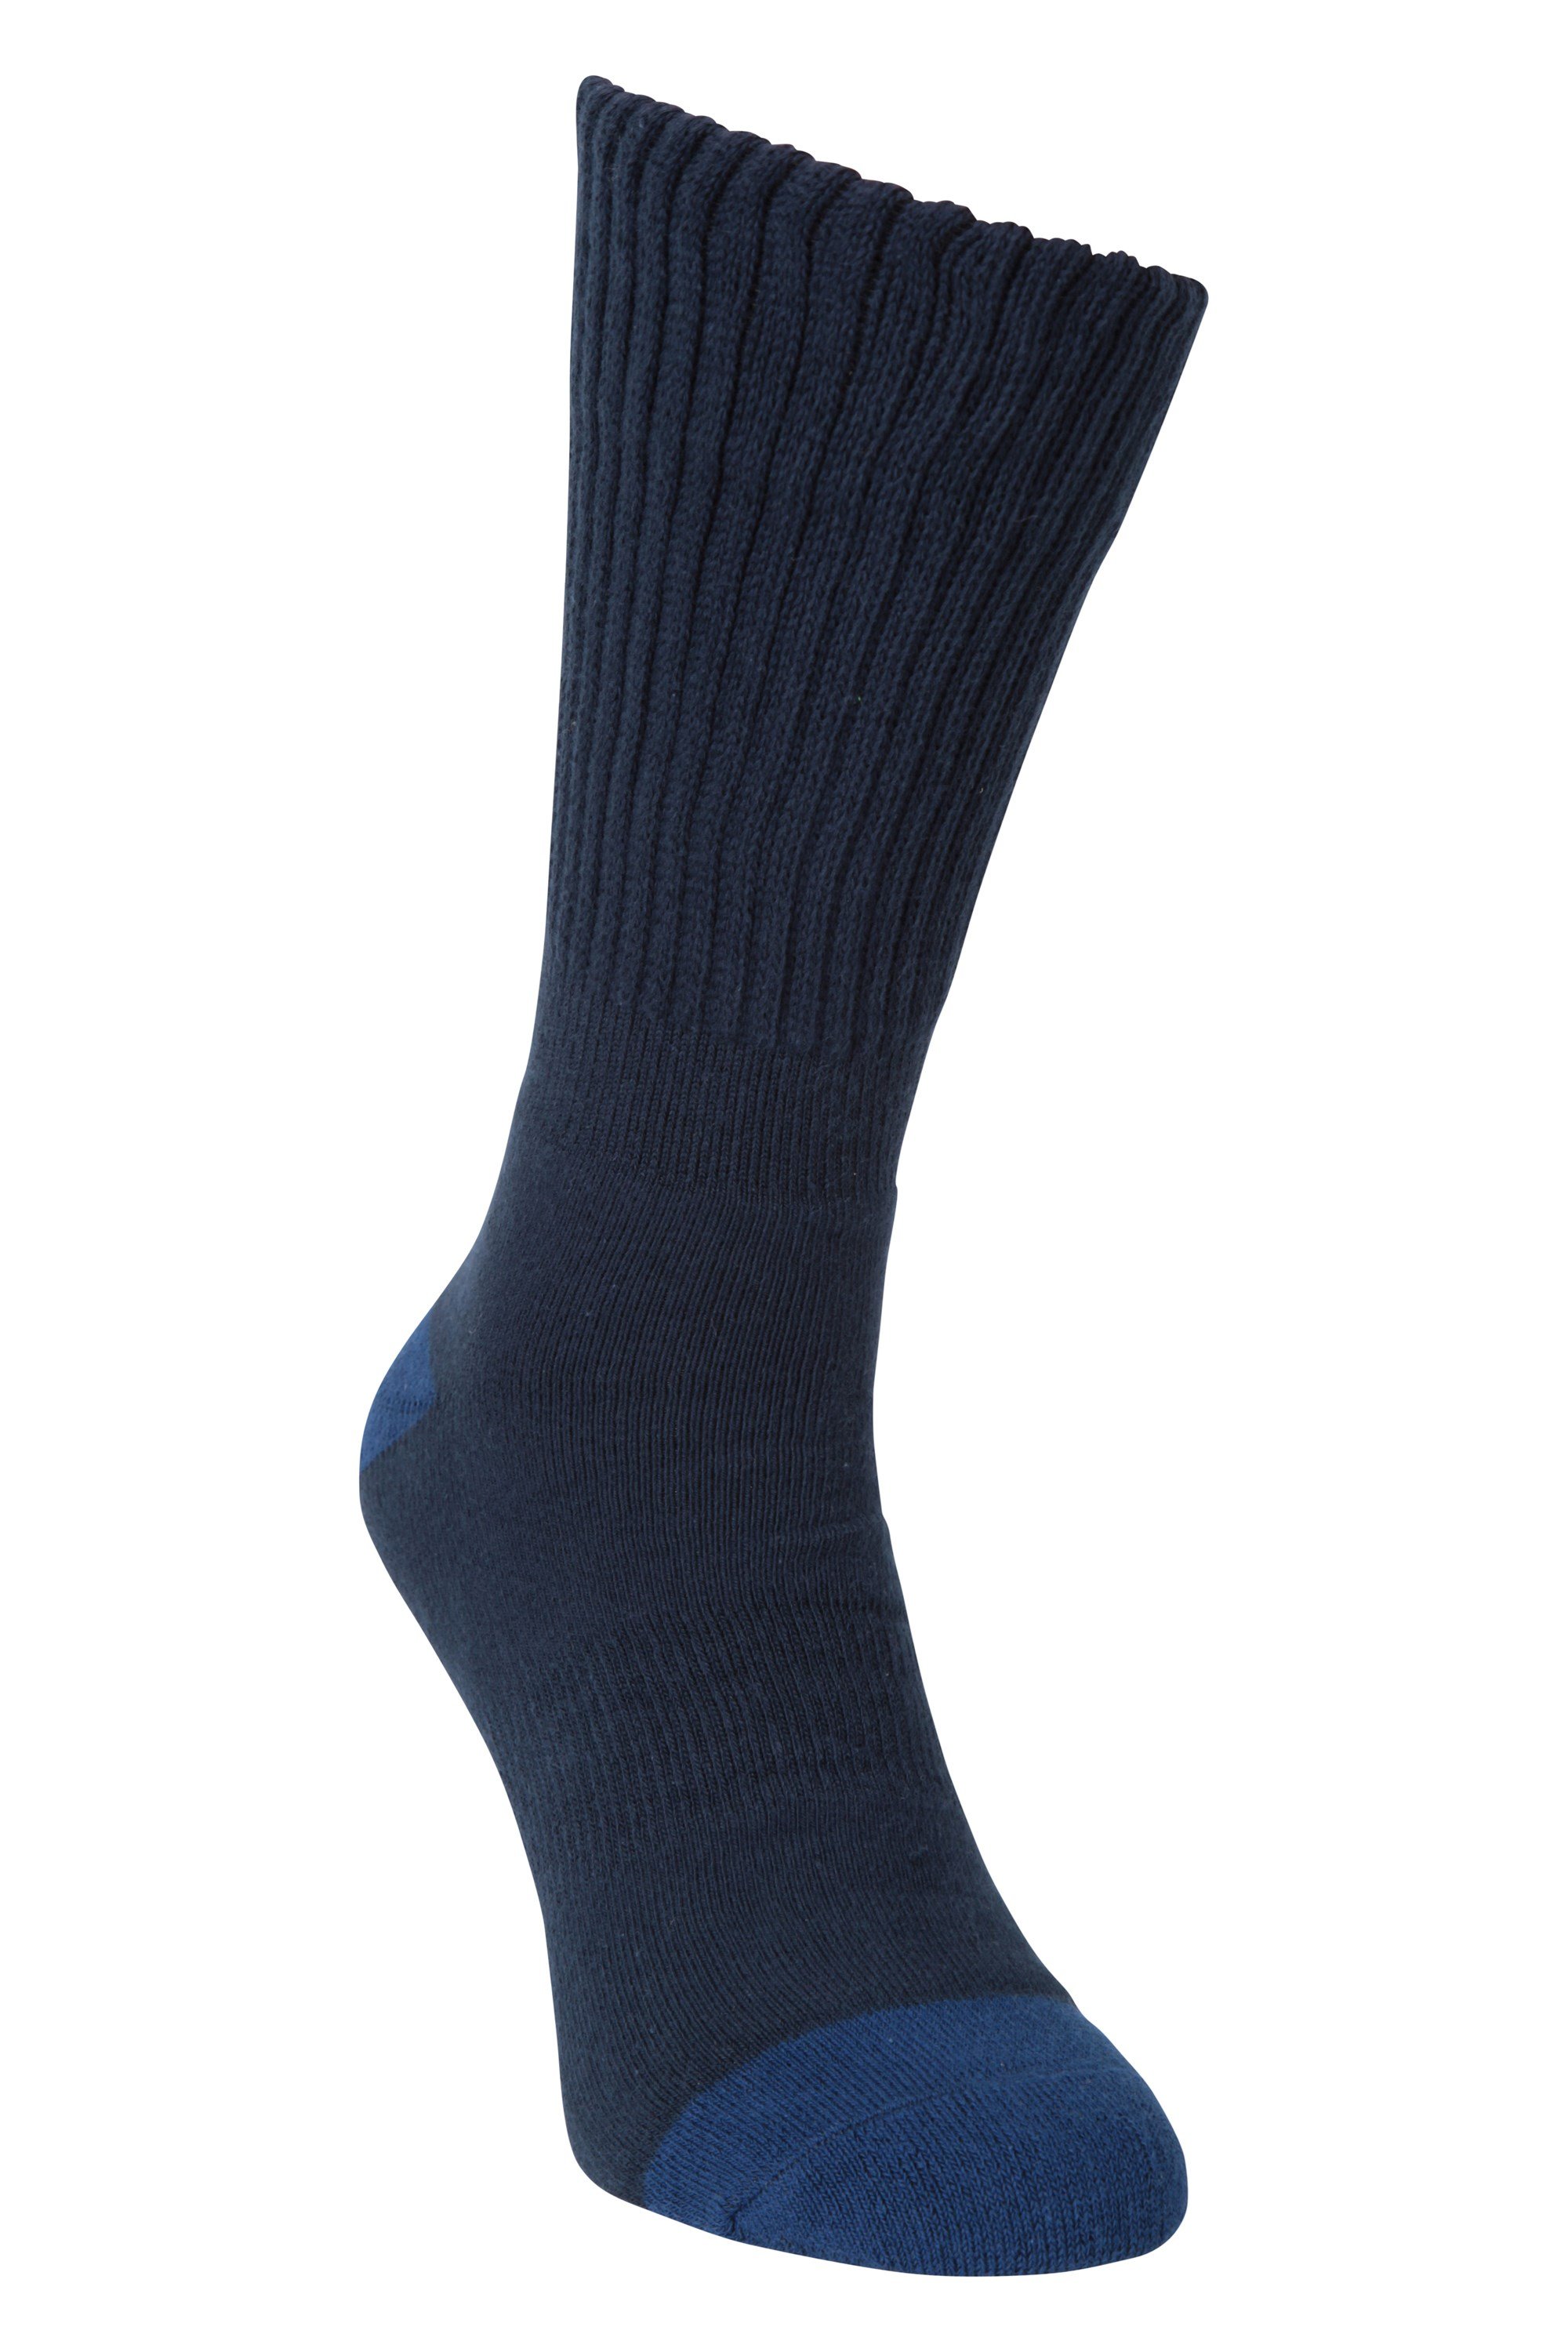 Walking Socks, Denim sock, Quality Socks, Yorkshire Socks, Blue Socks, Multi coloured Socks, British Socks, UK Sock Manufacturer